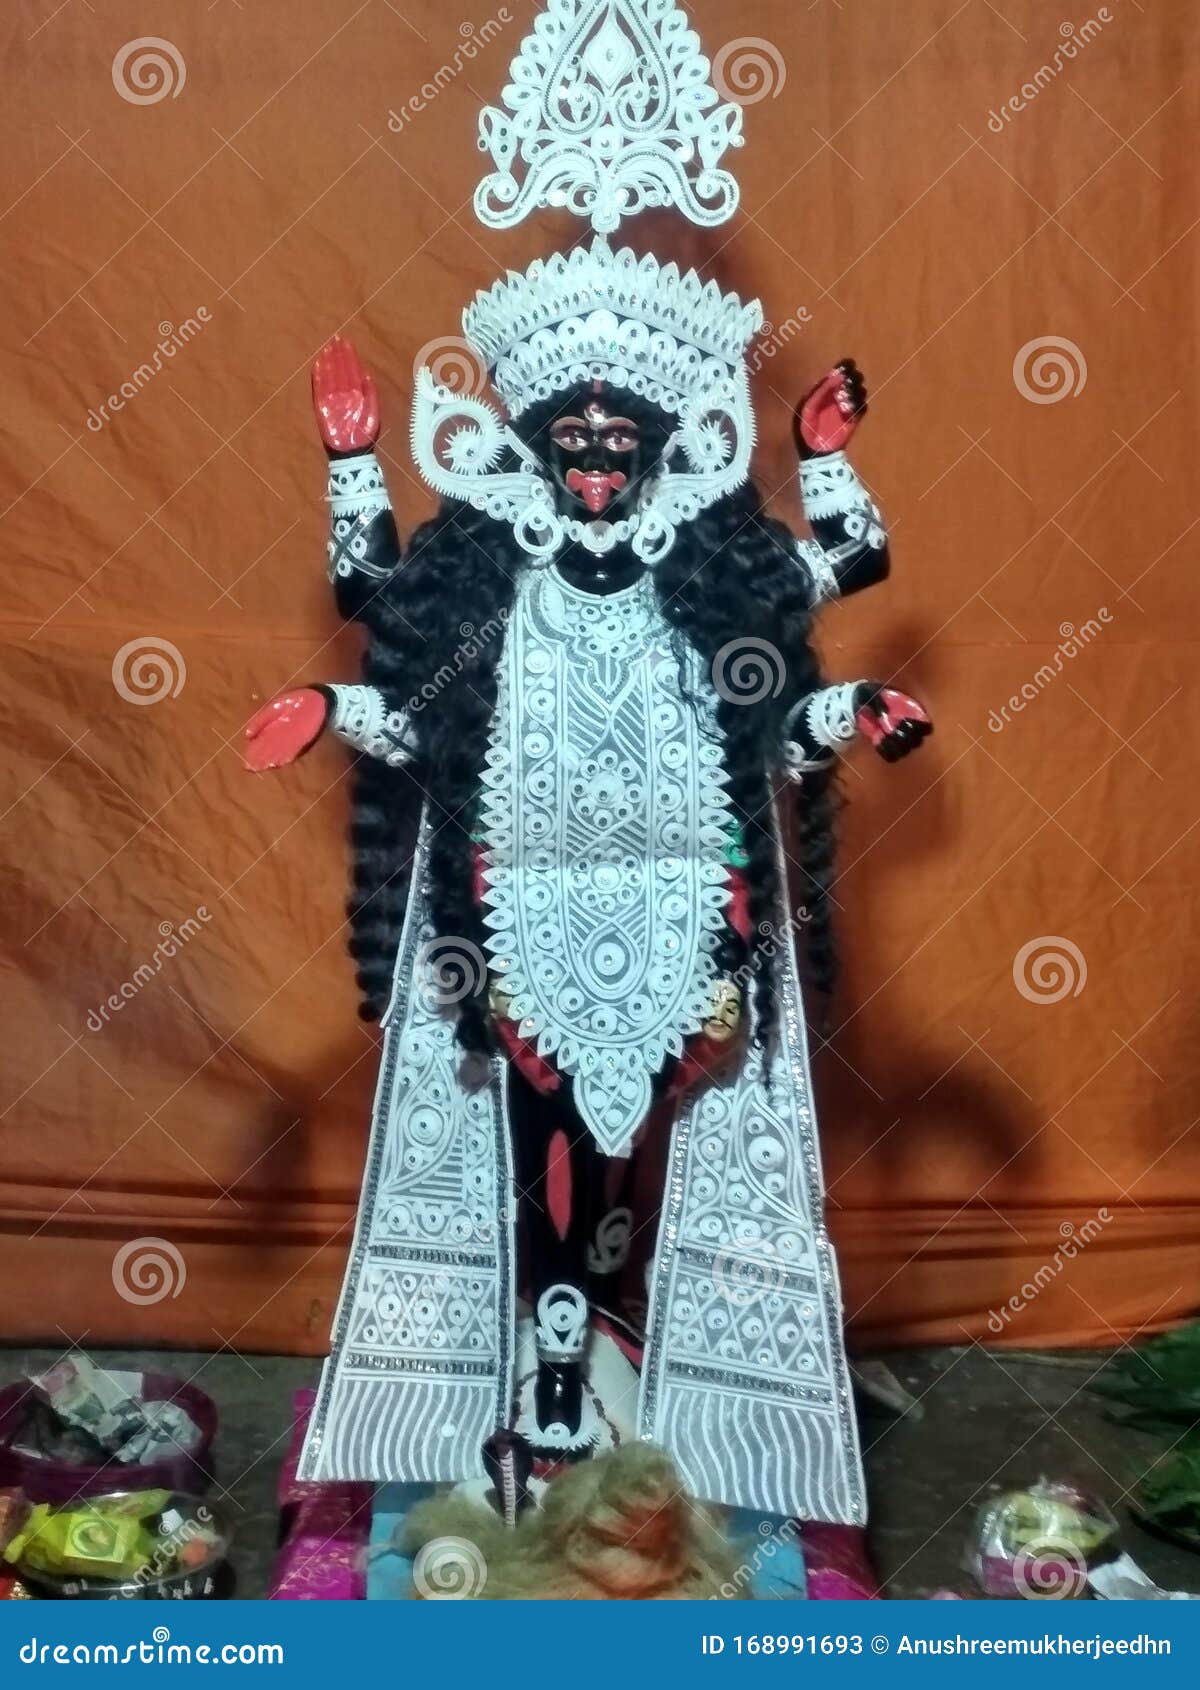 Maa Kali Idol for Kali Puja Stock Image - Image of body, bihari: 168991693